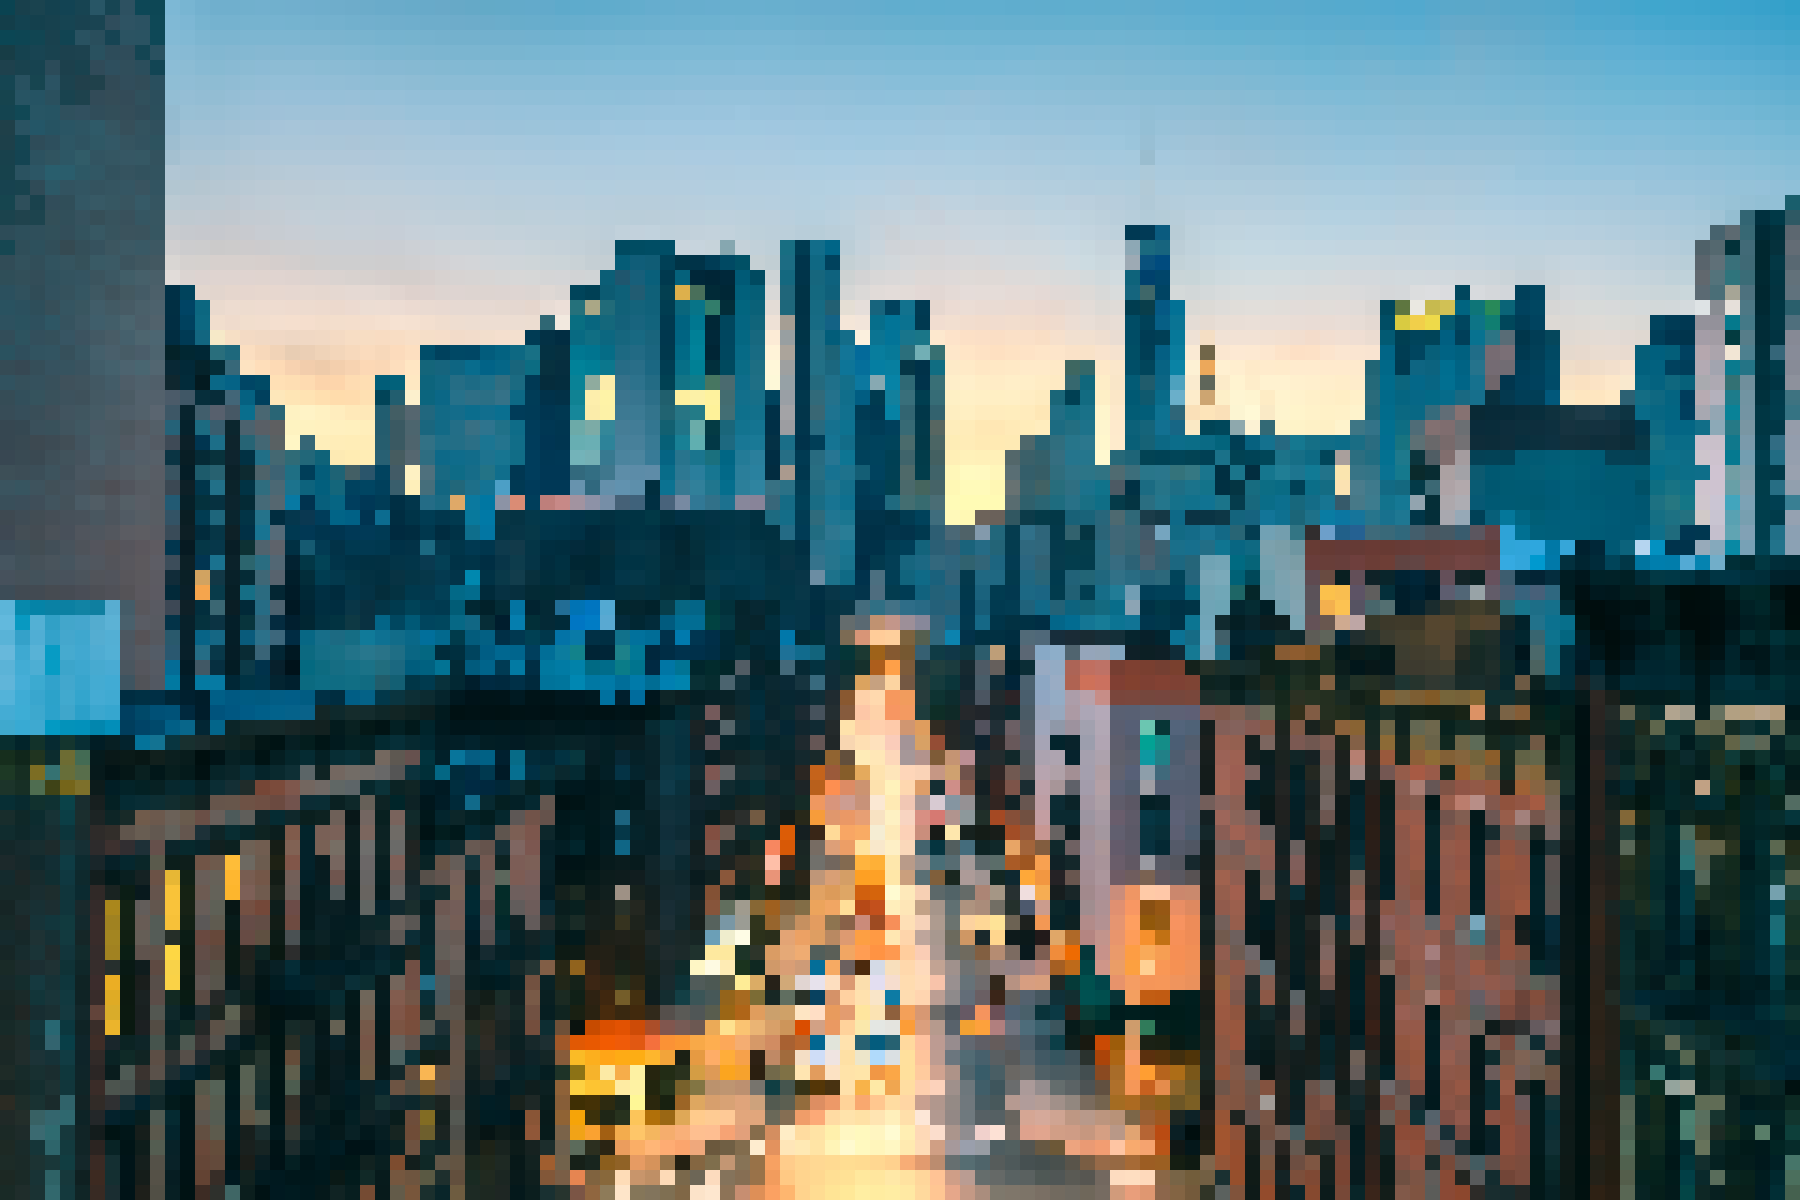 City Street with Light 8bit pixel style